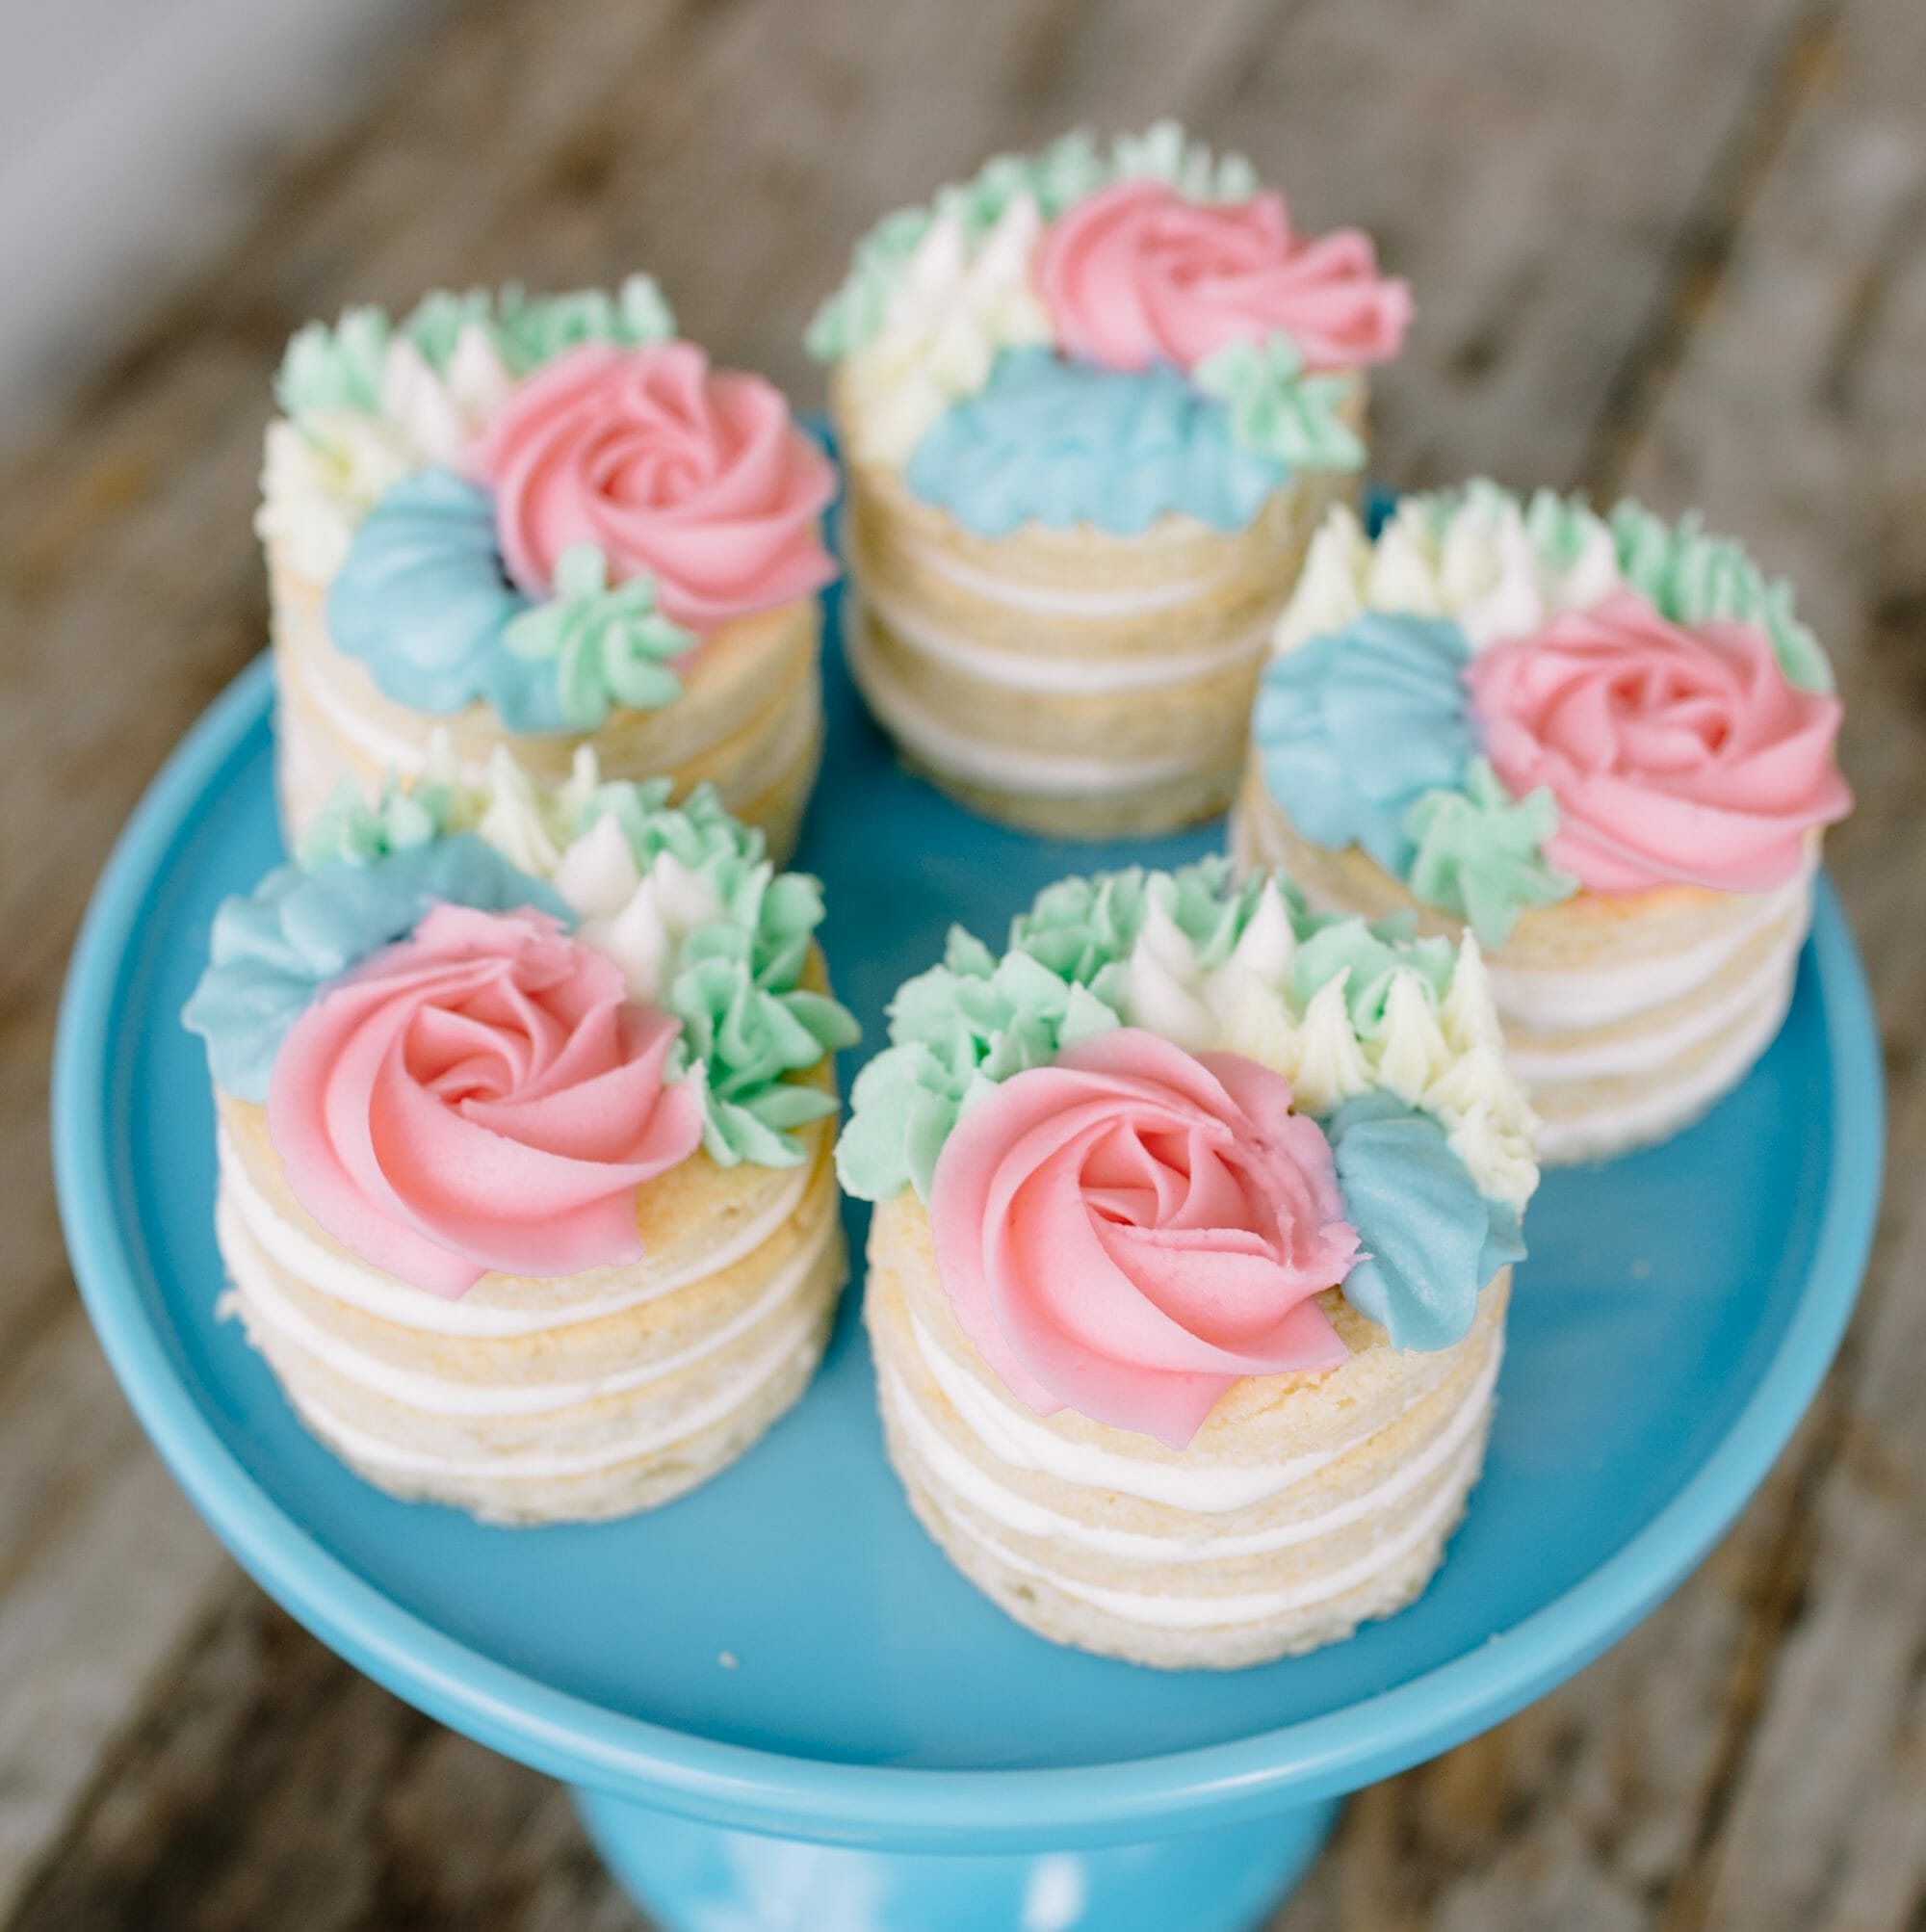 How to Make Mini Flower Cakes